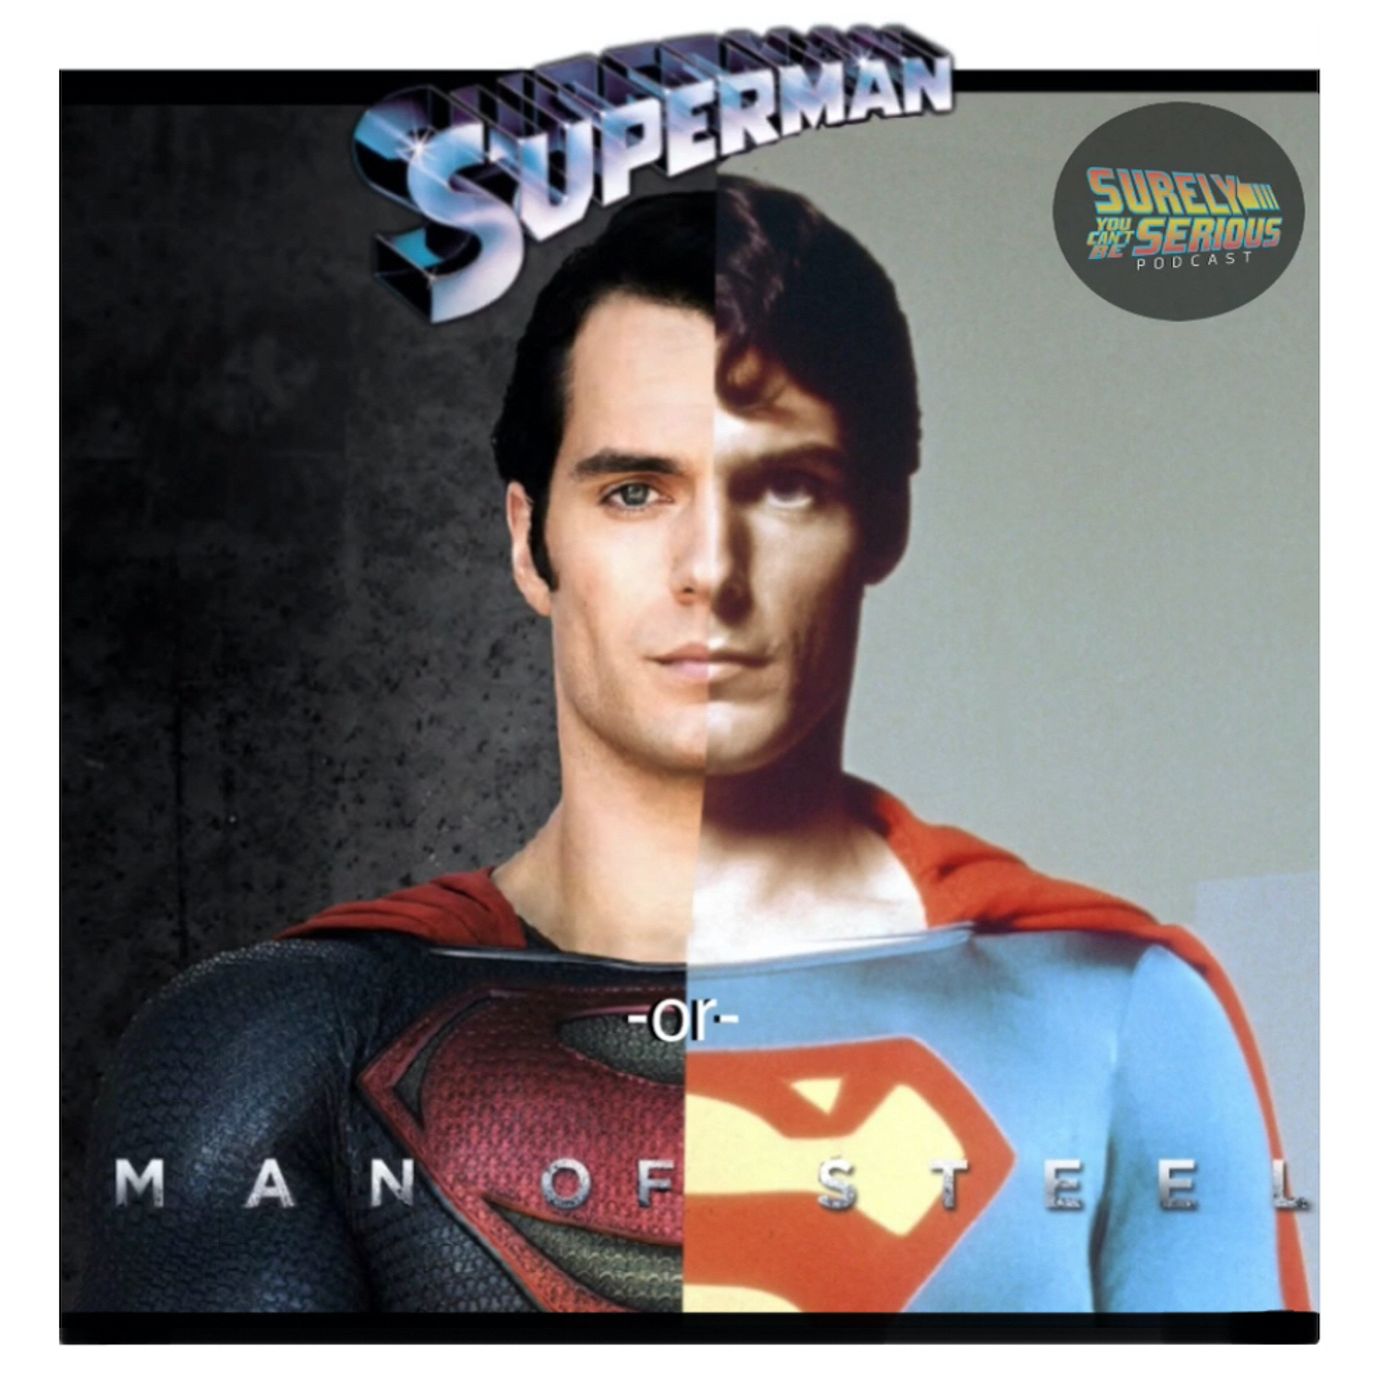 Superman I & II (1978 & 1981) -or- Man of Steel (2013)?!